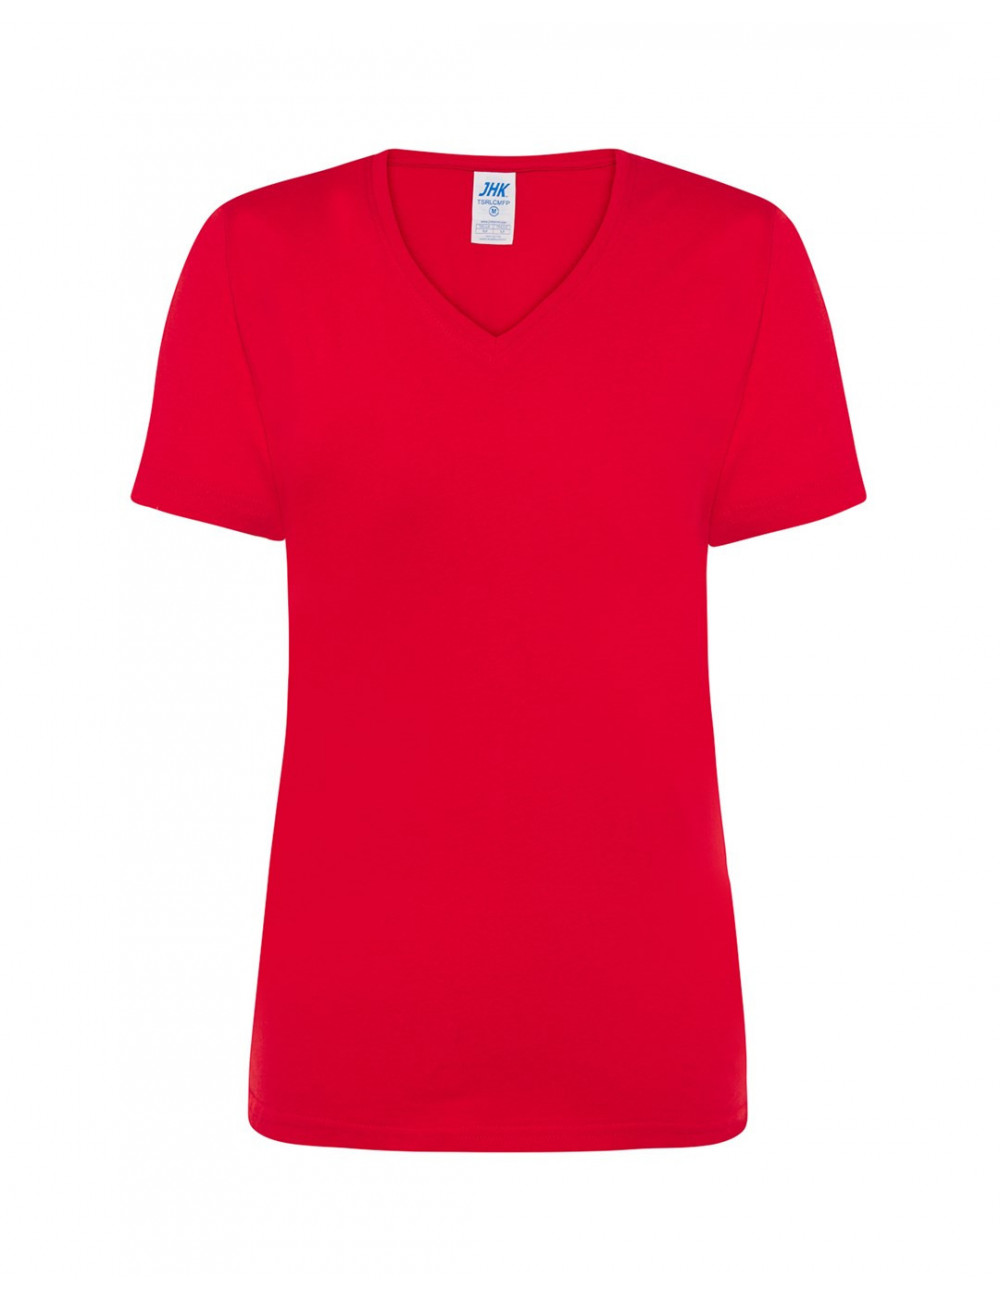 T-shirt for women tsrl cmfp lady comfort v-neck red Jhk